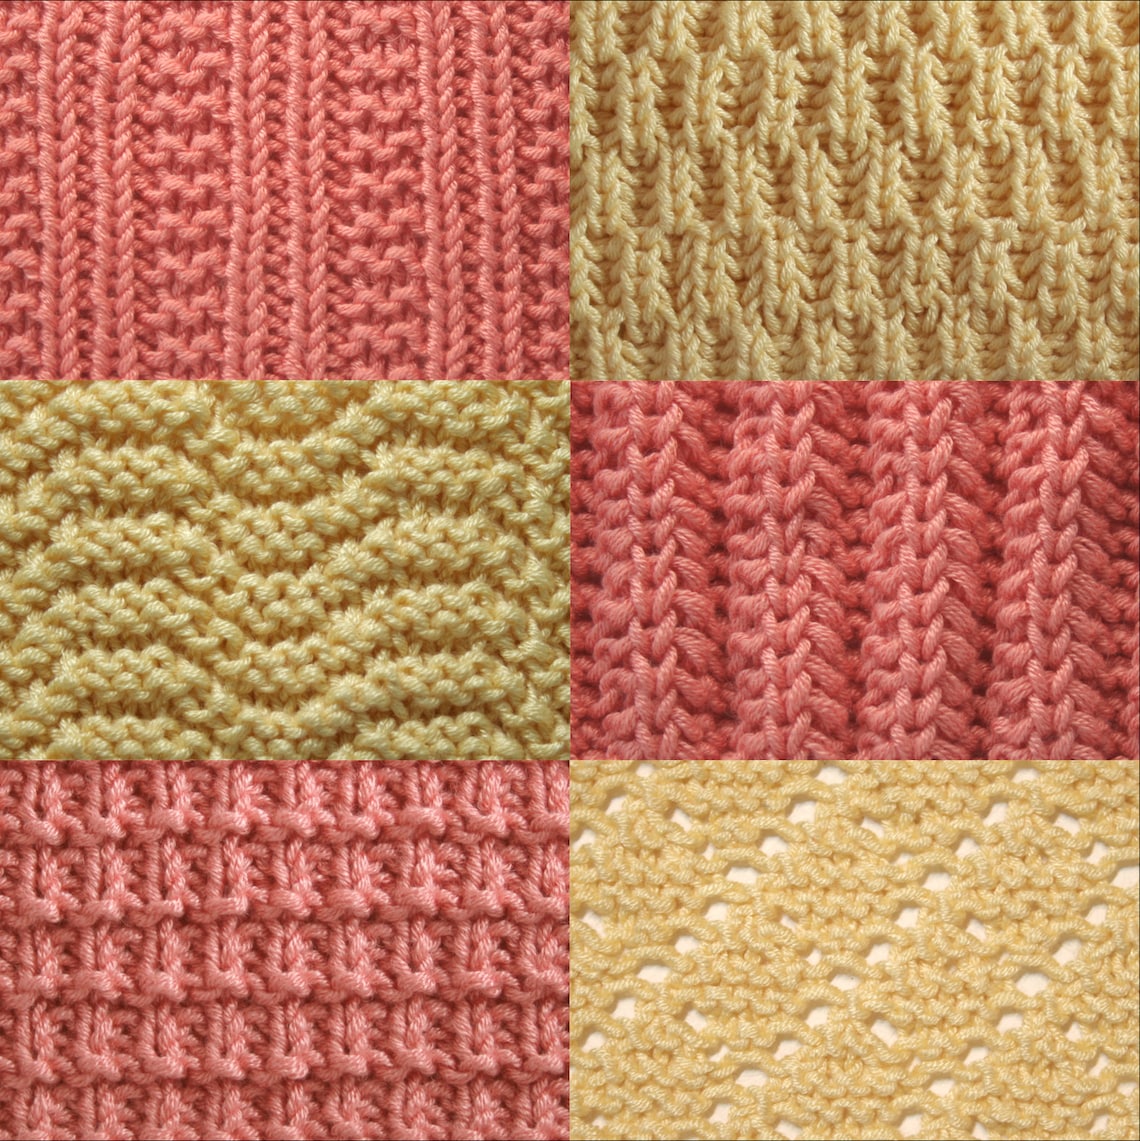 Knitting stich patterns e-book reversible knit stitches pdf | Etsy